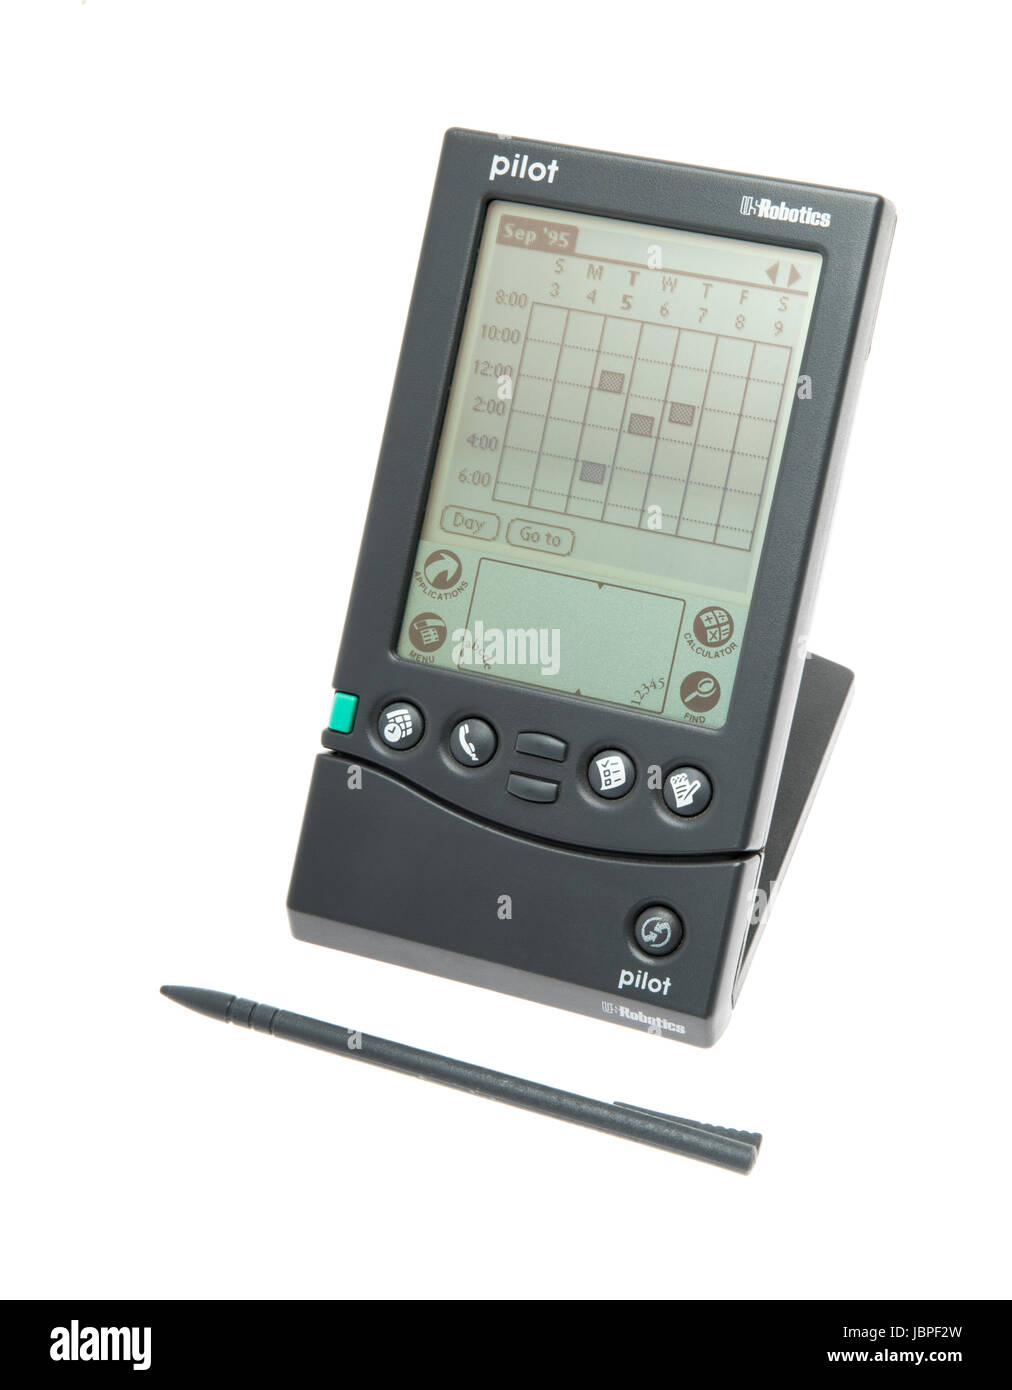 Pilot 1000 PDA rilasciato 1996 da Palm Inc filiale o U.S. Robotics con stilo Palm Pilot aka aka PalmPilot Palm-Pilot Foto Stock